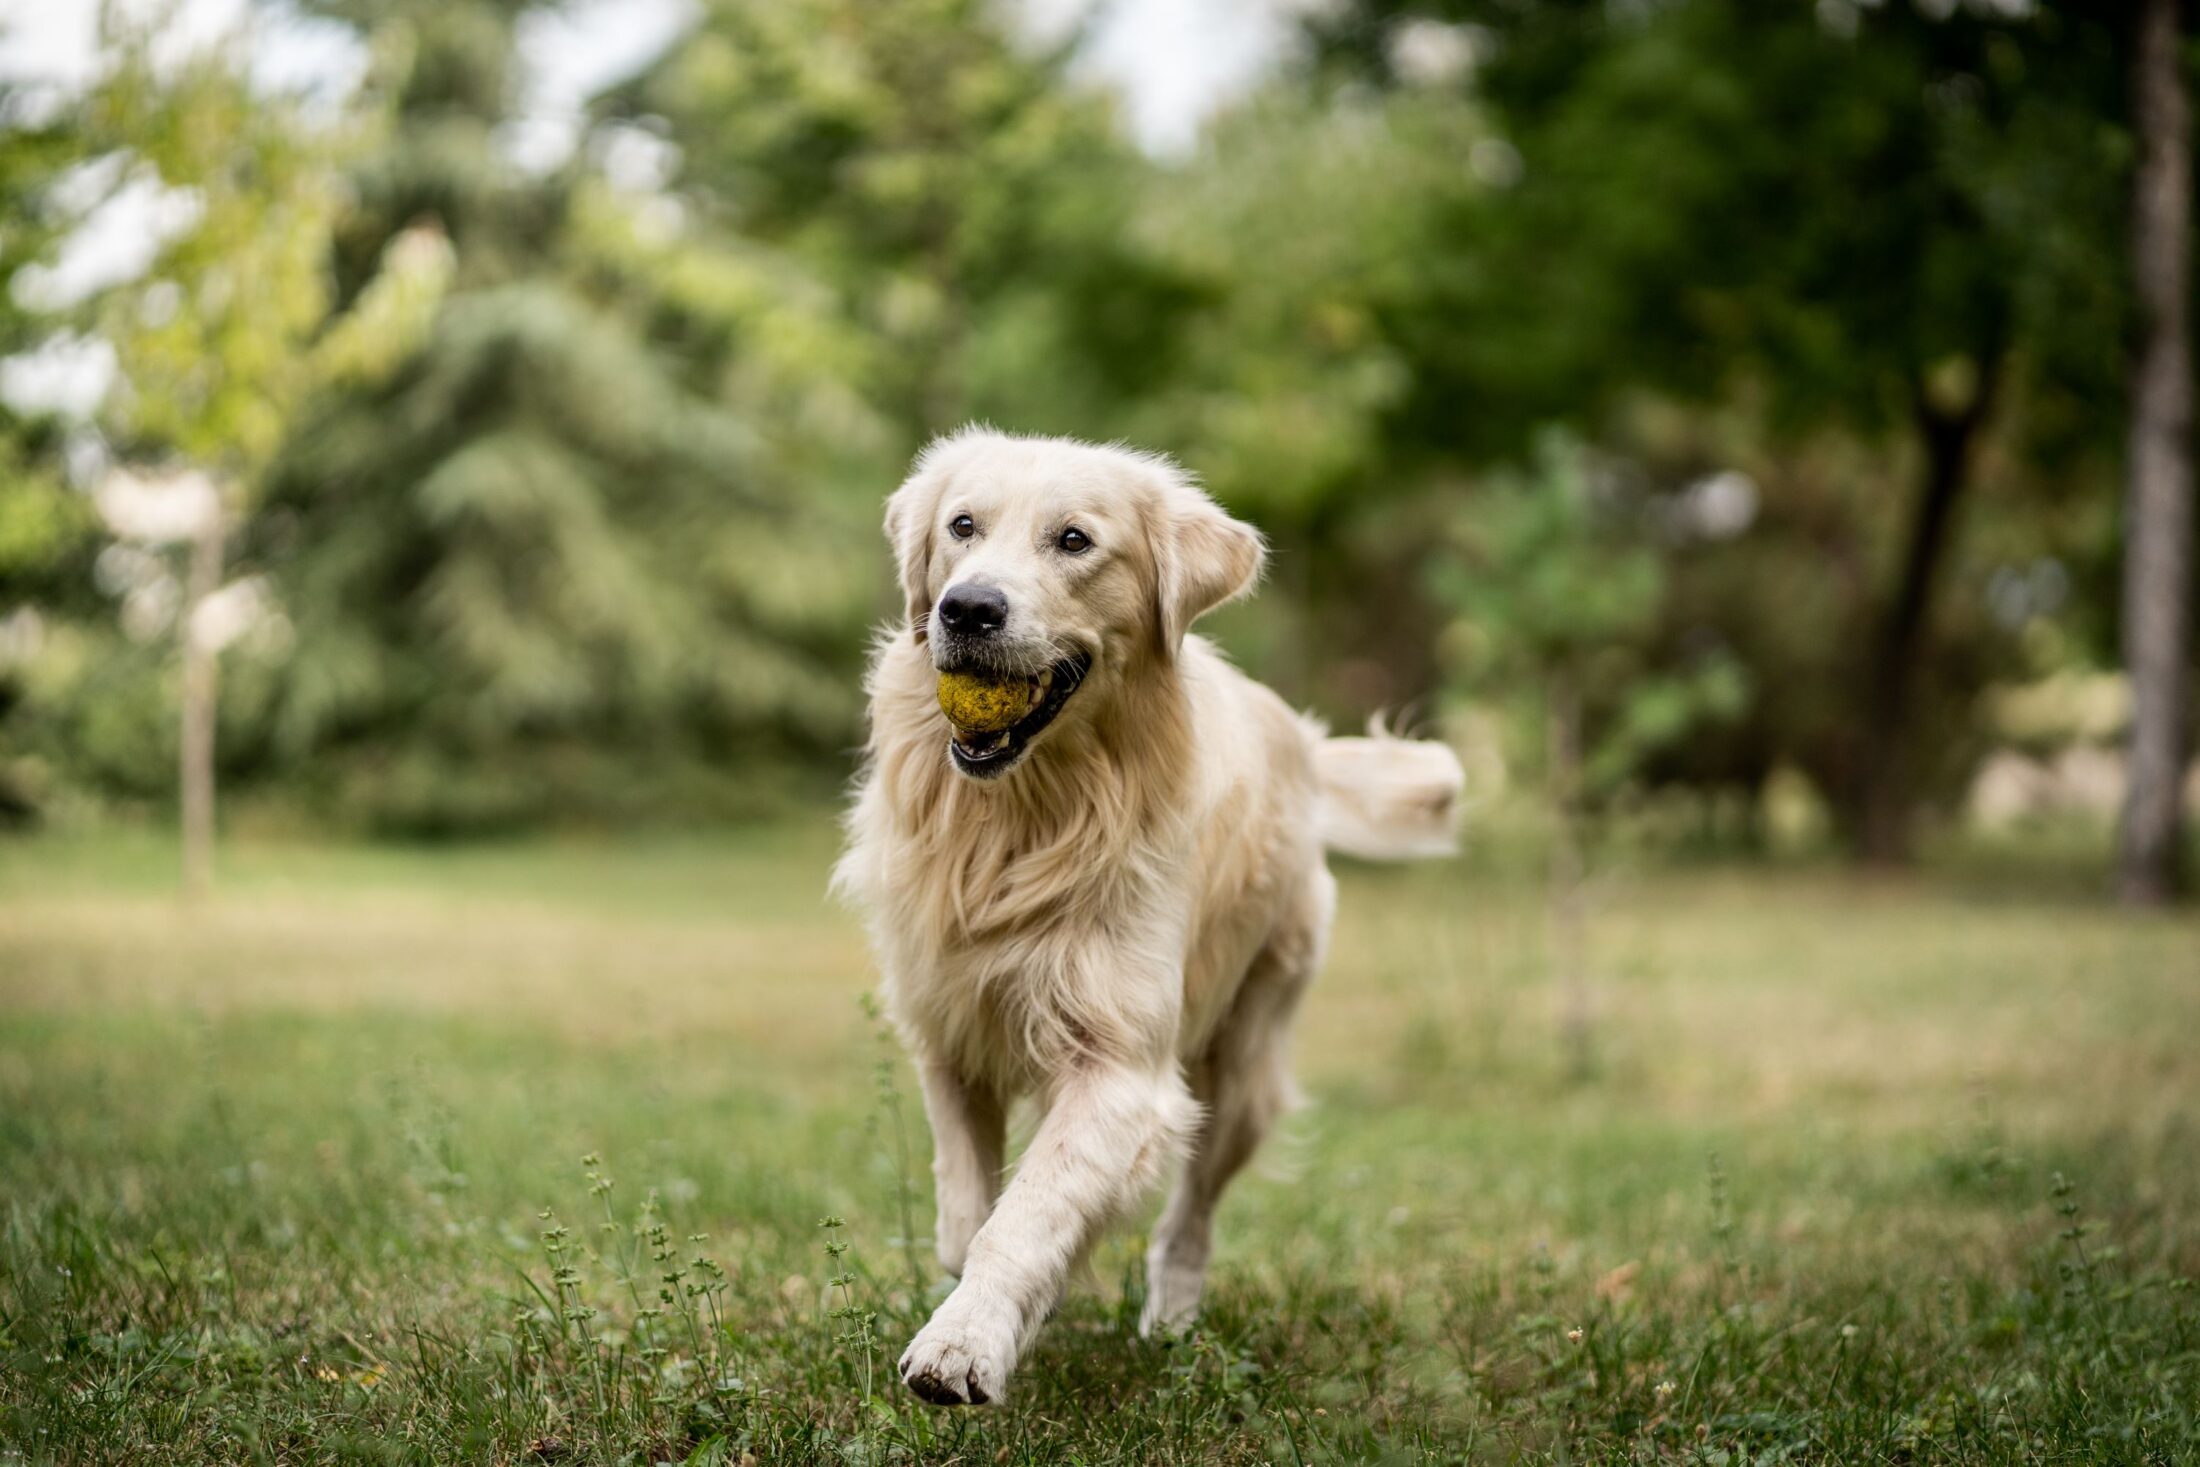 Dog with tennis ball running.